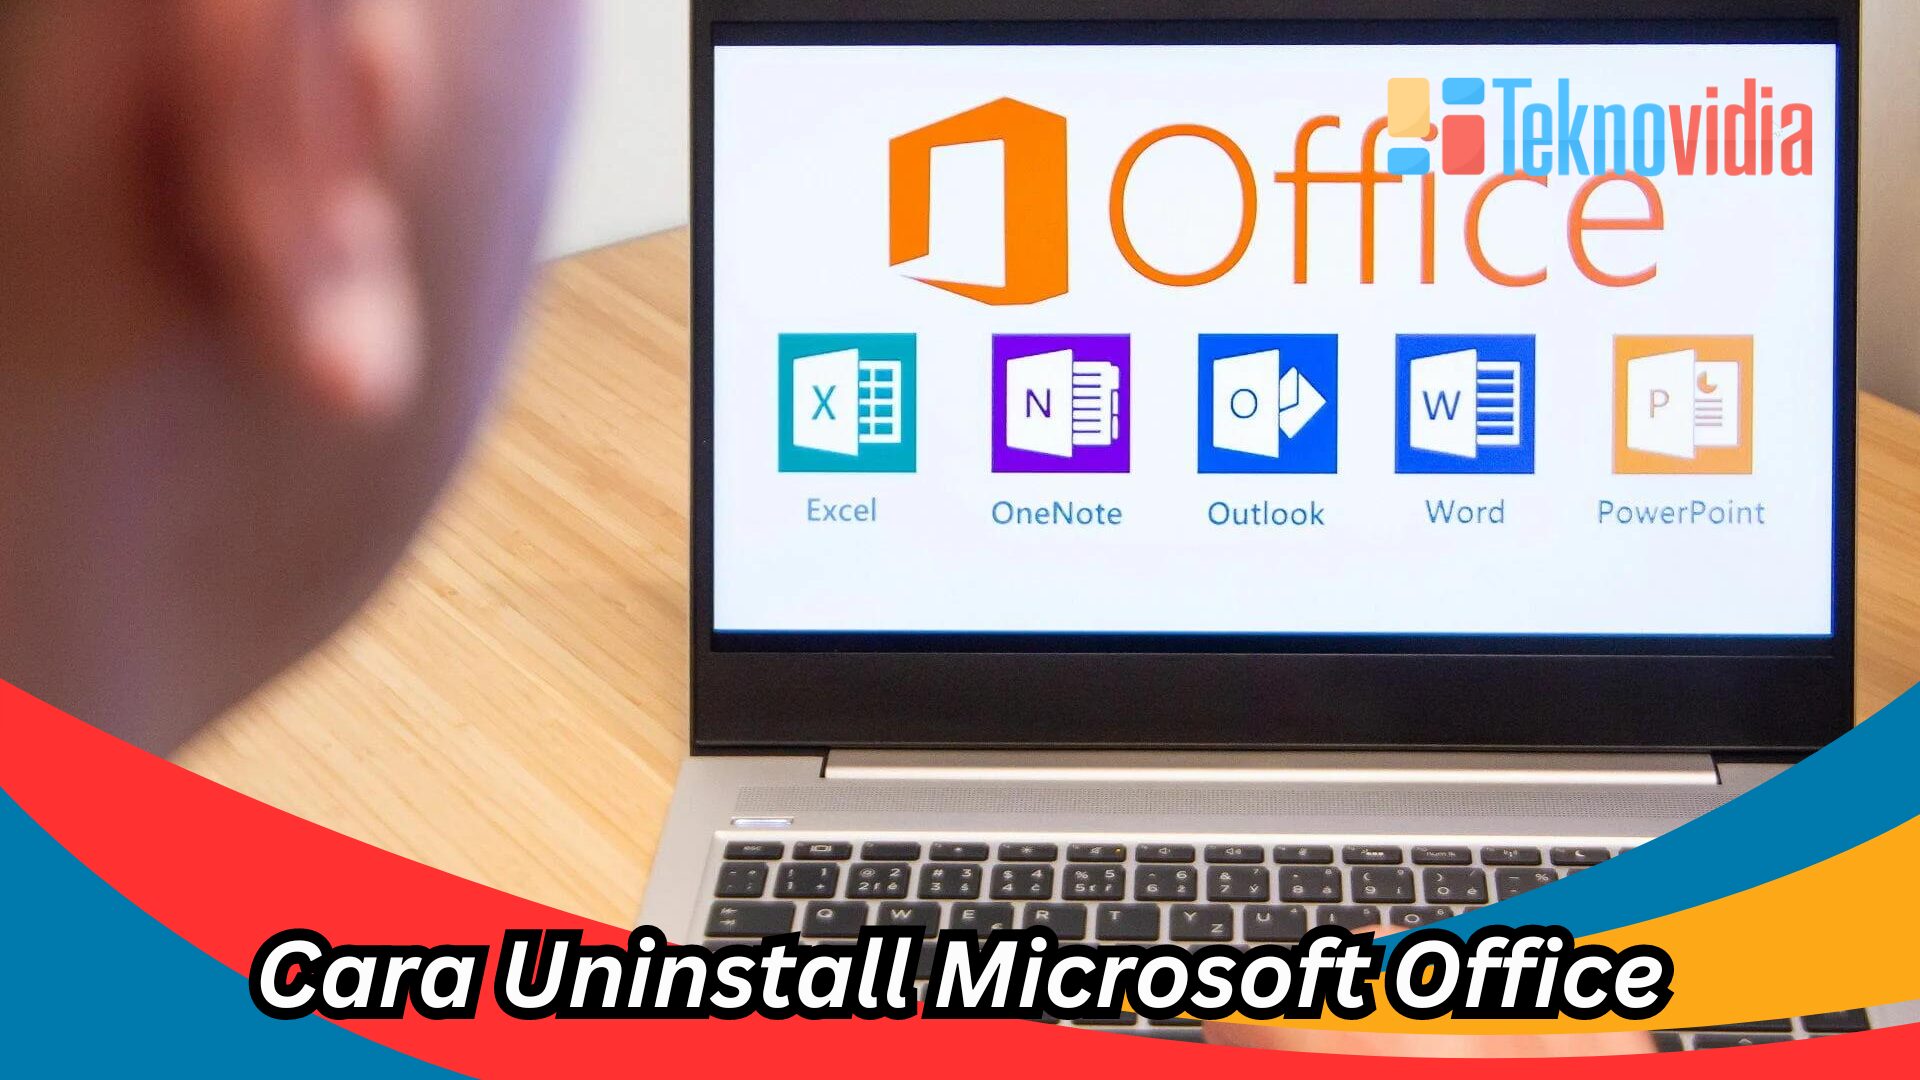 Cara Uninstall Microsoft Office